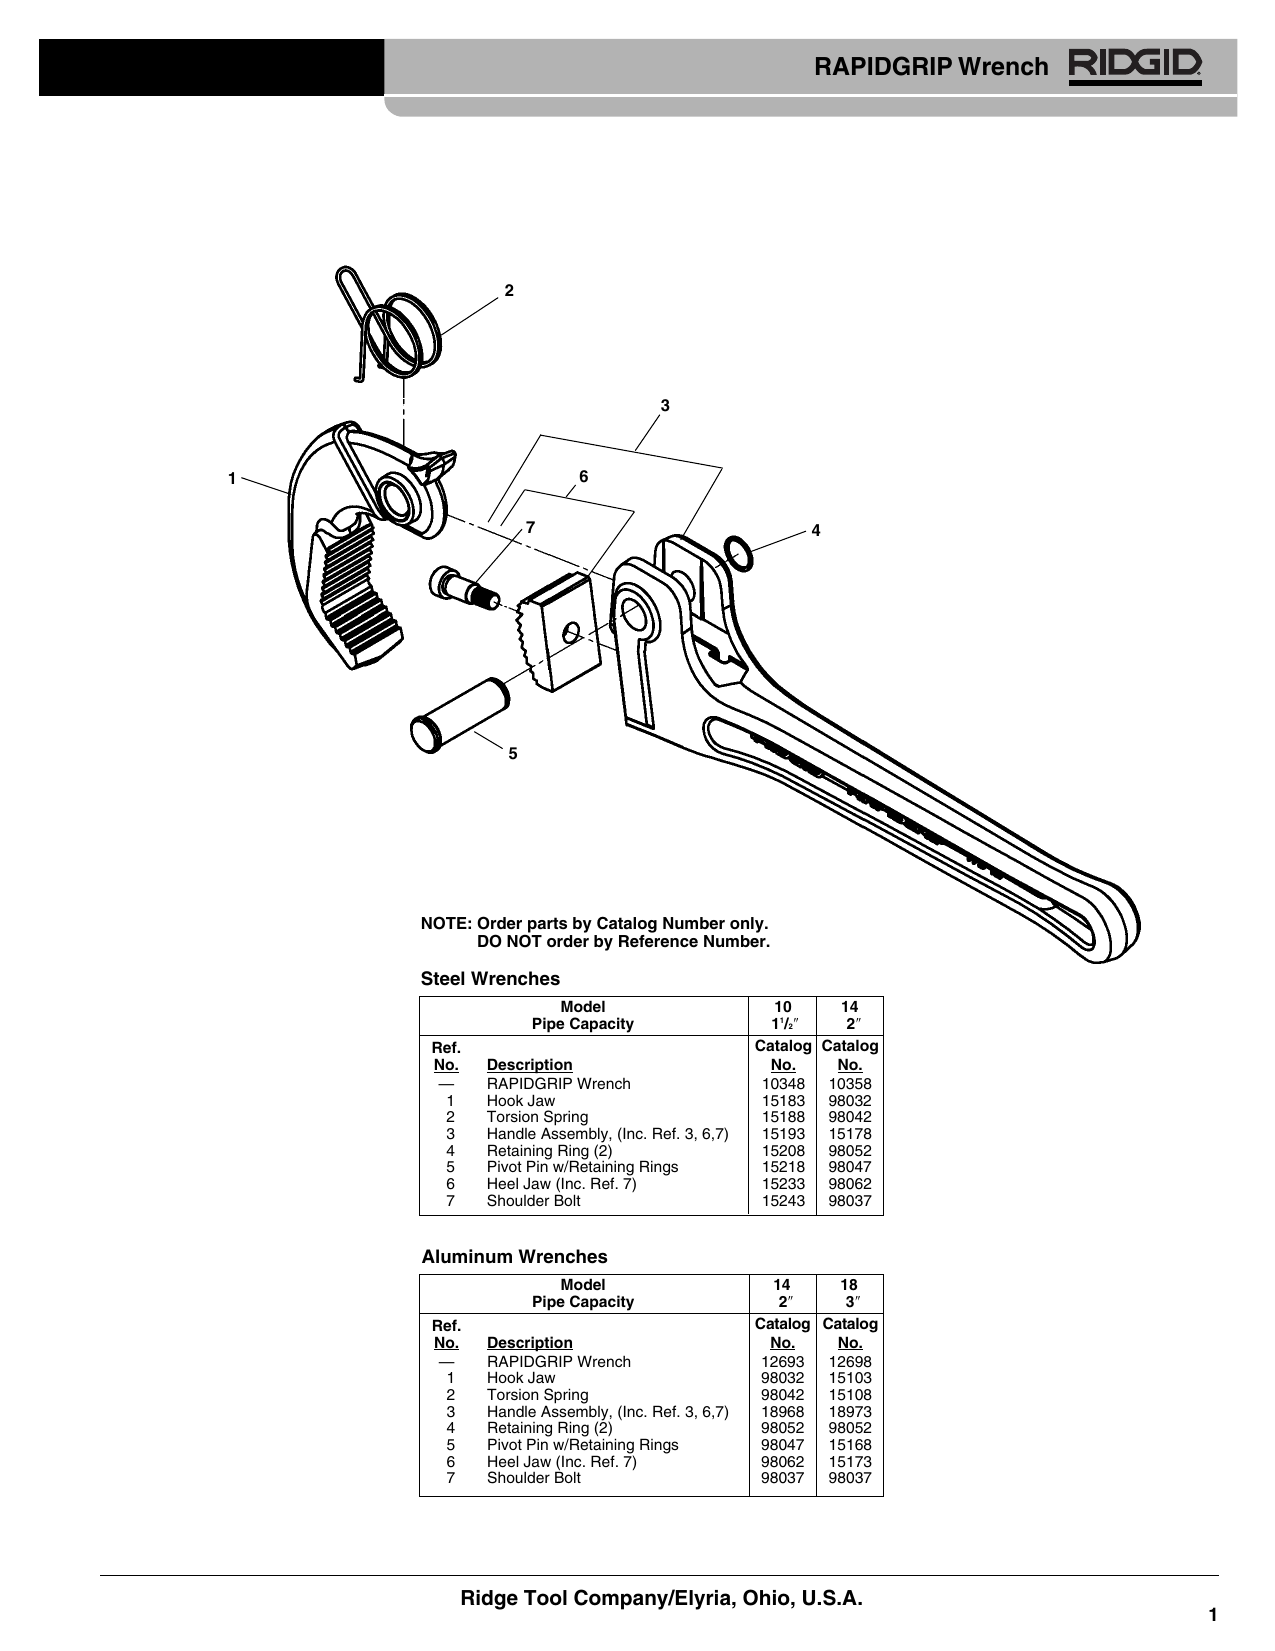 Torsion Spring for Ridgid 14" Rapidgrip Wrench Ridgid Replacement Part 98042 